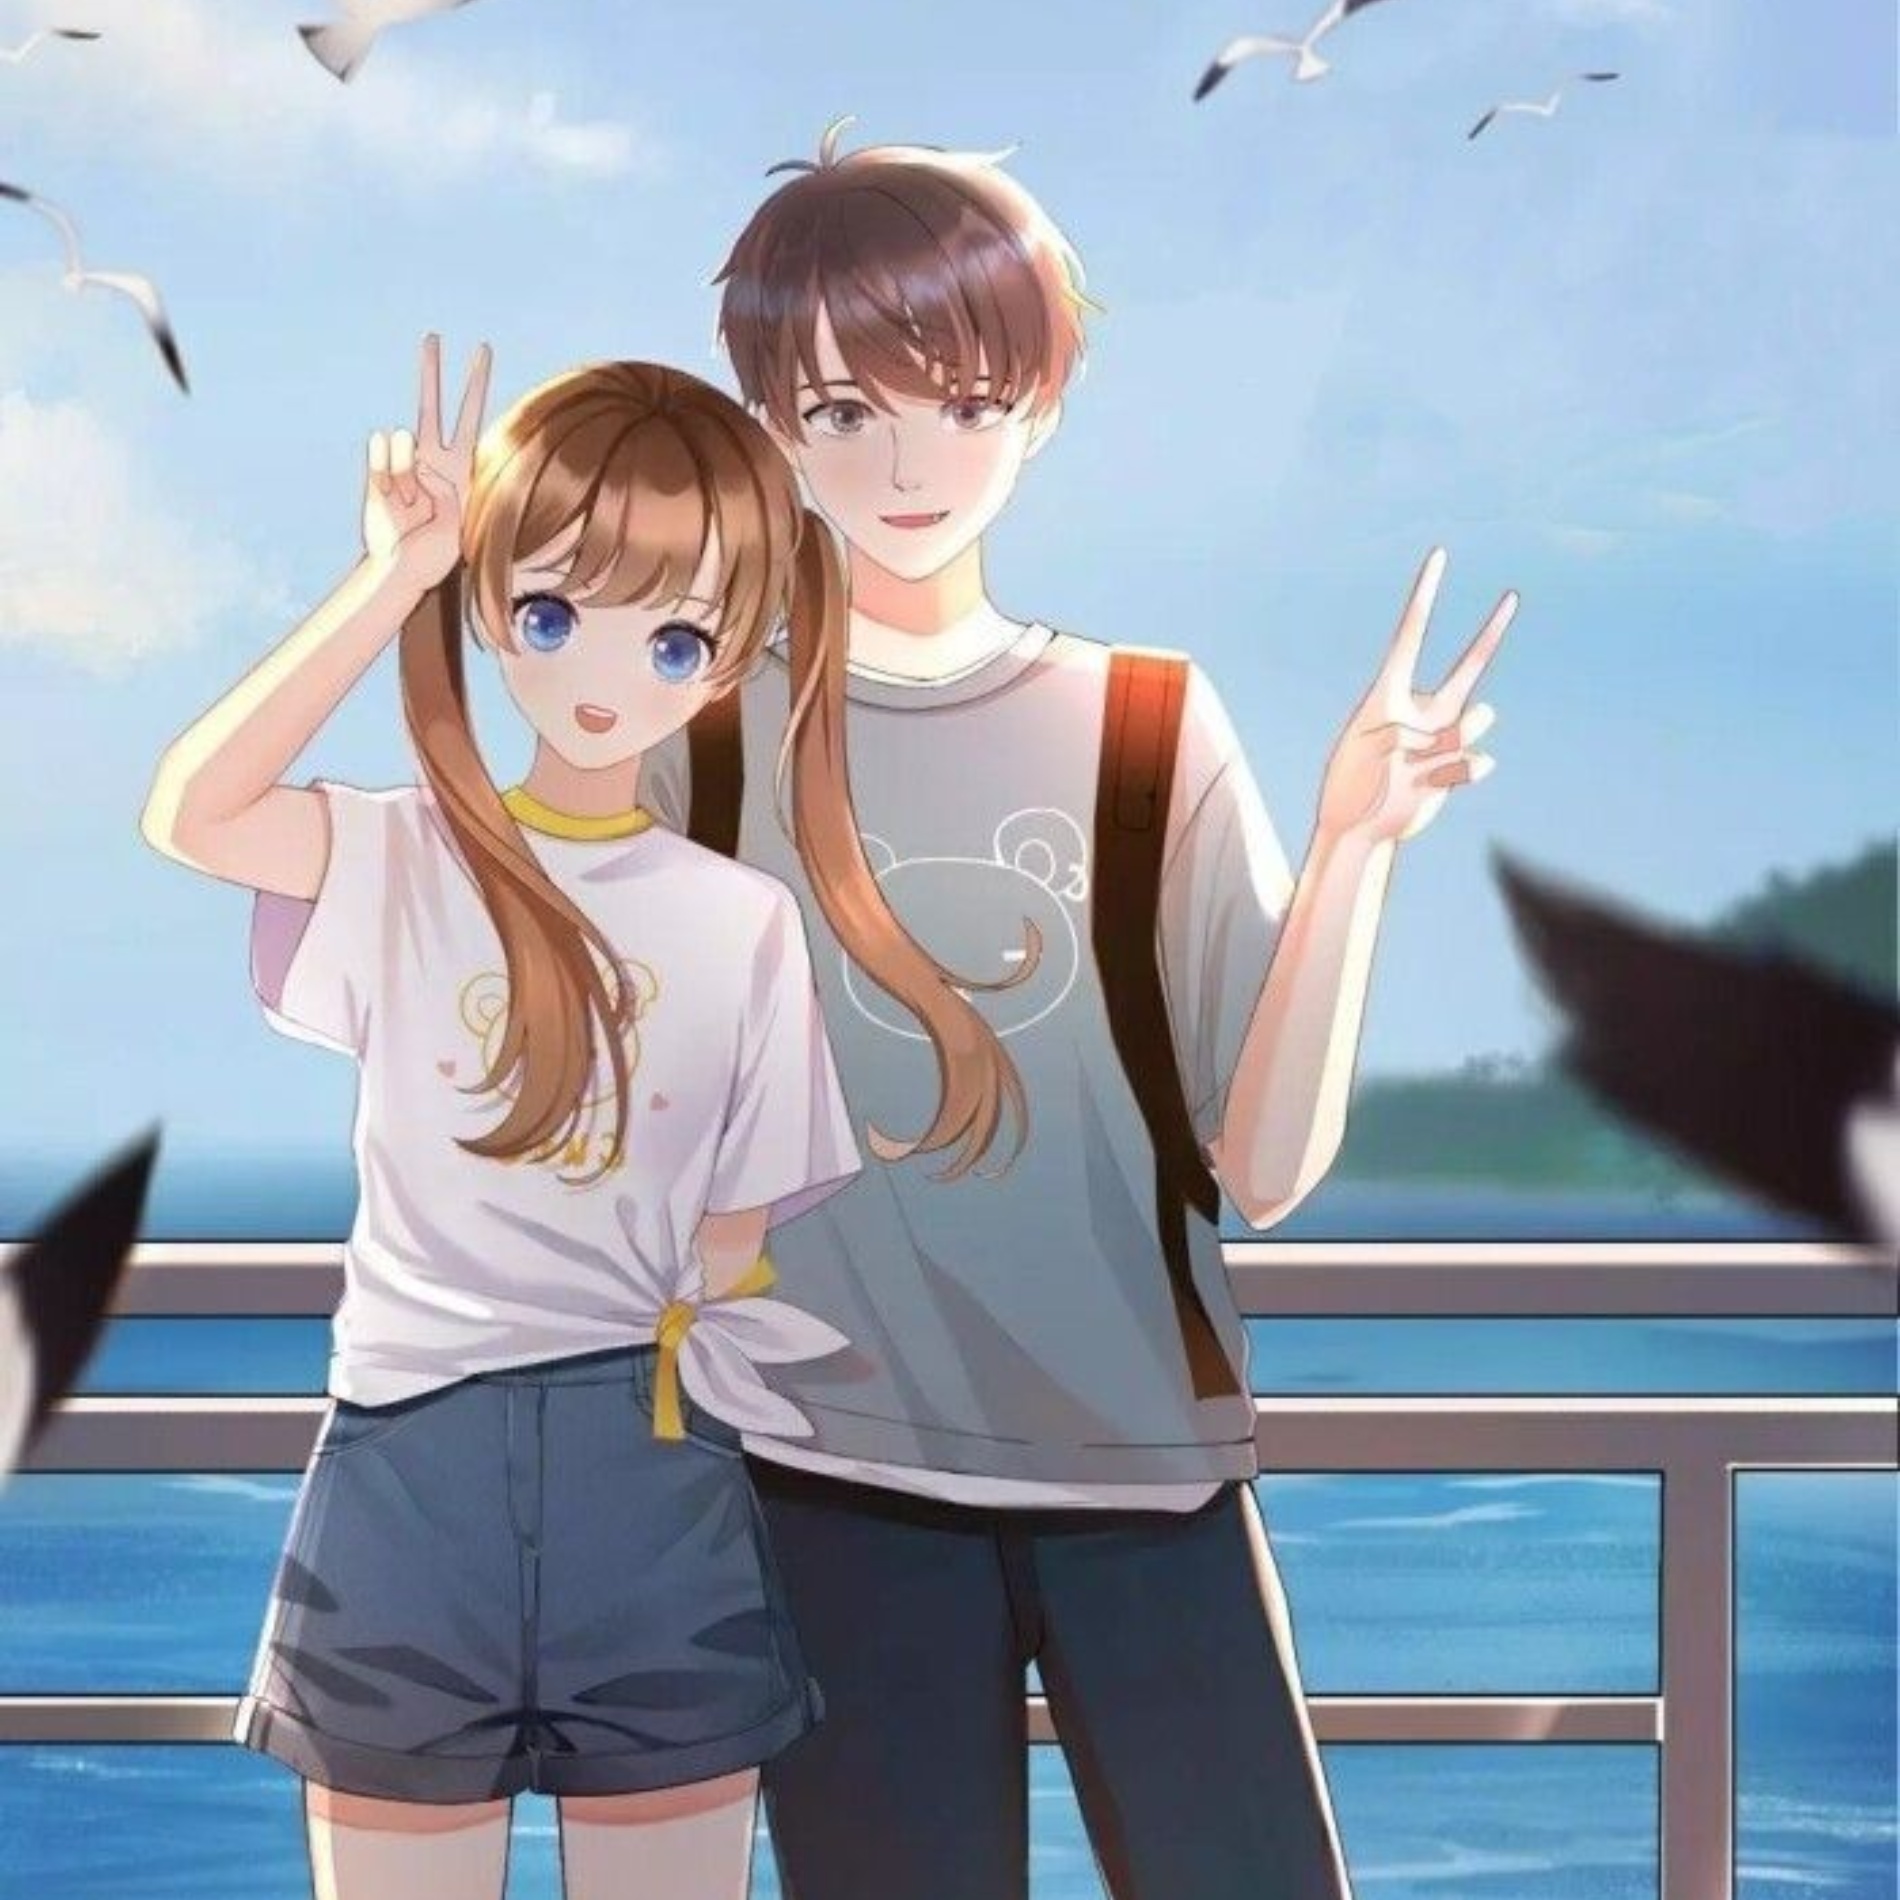 Anime Boy And Girl Couple Pfp 4k